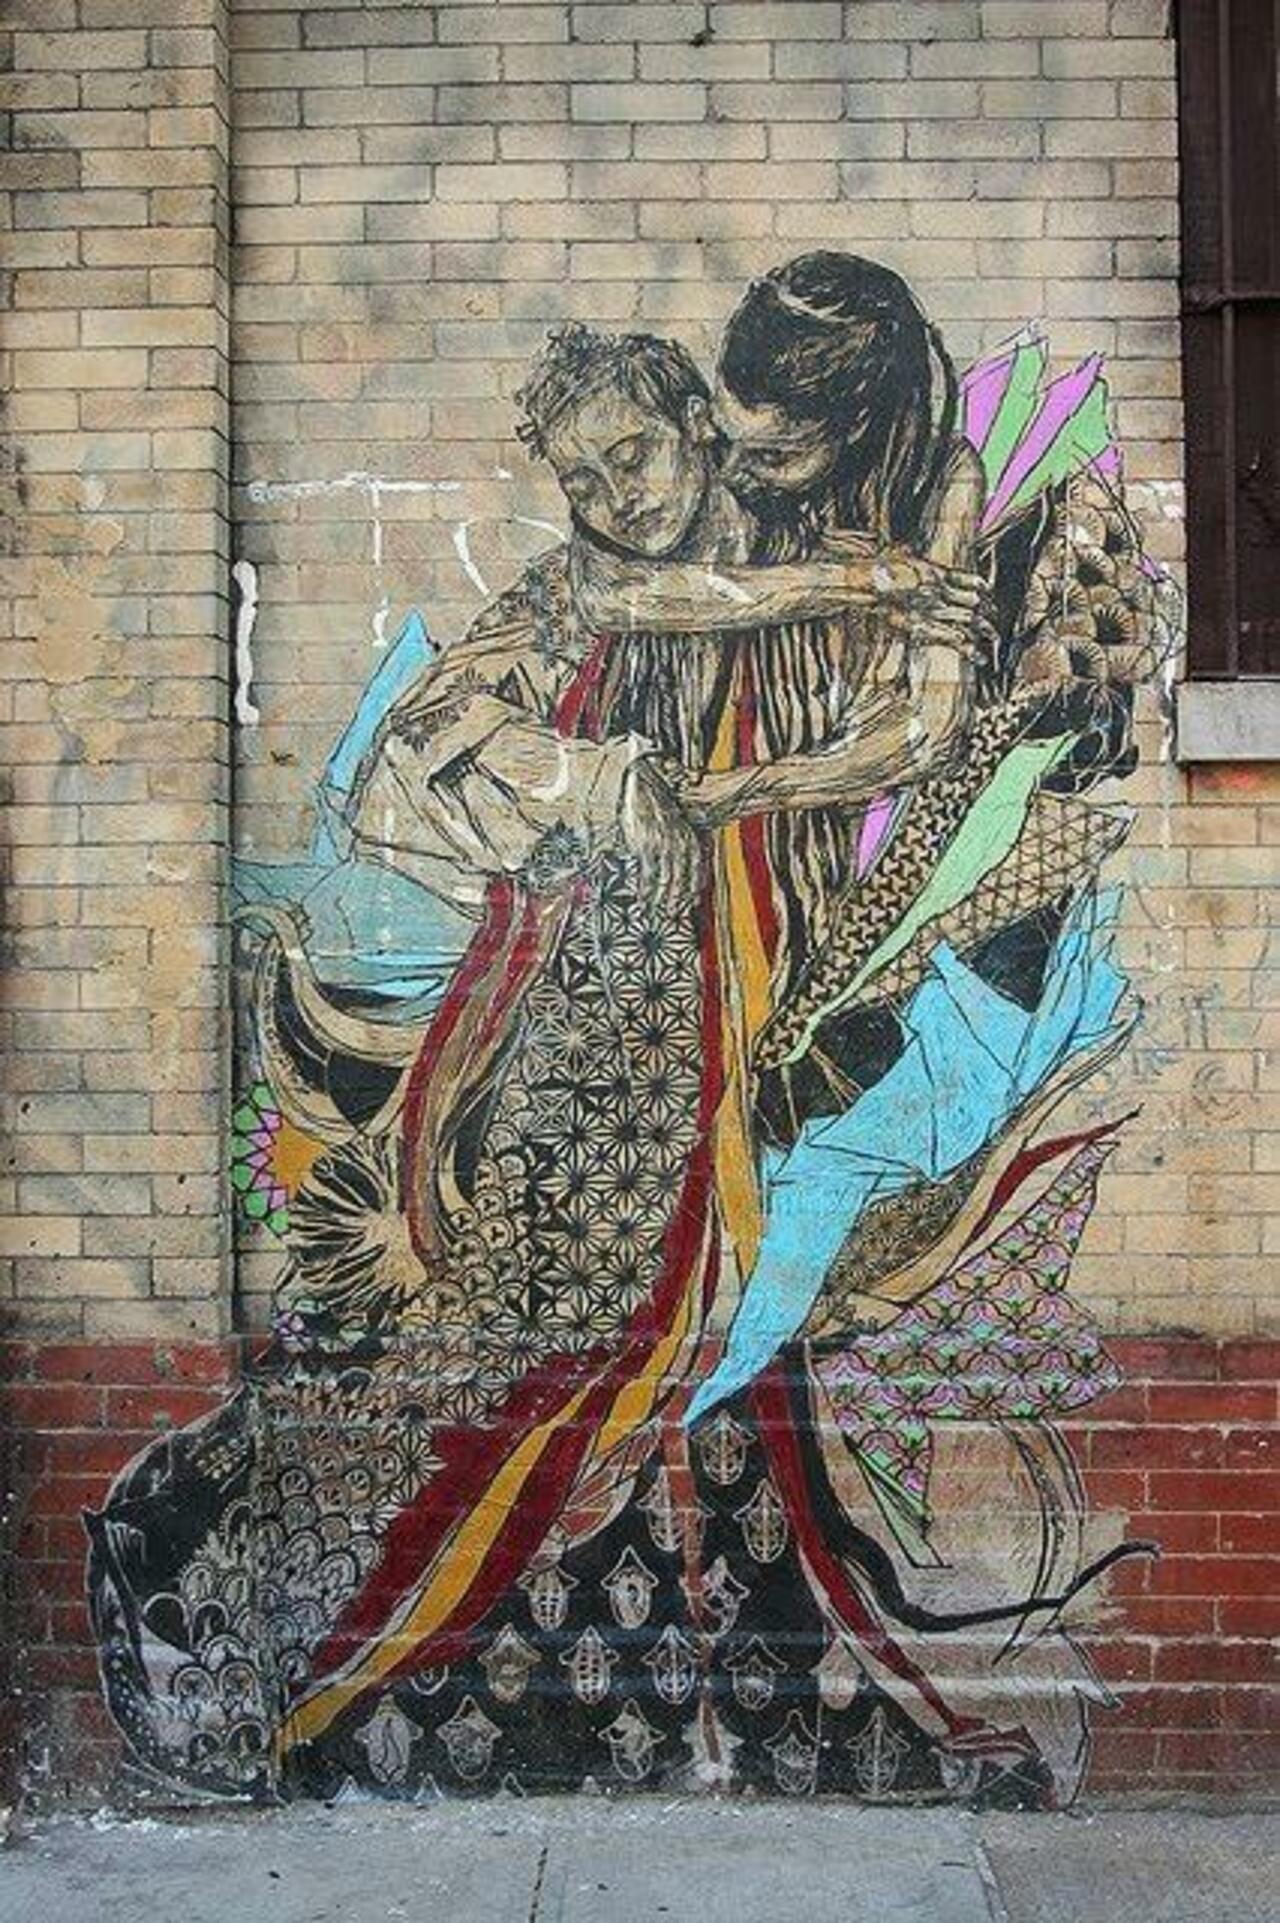 RT @XSkye1: #Awesome #Streetart by #Swoon #Brooklyn #NYC #Popart #art #mural #graffiti .. #love this!!  http://t.co/gkGhPqhu8U